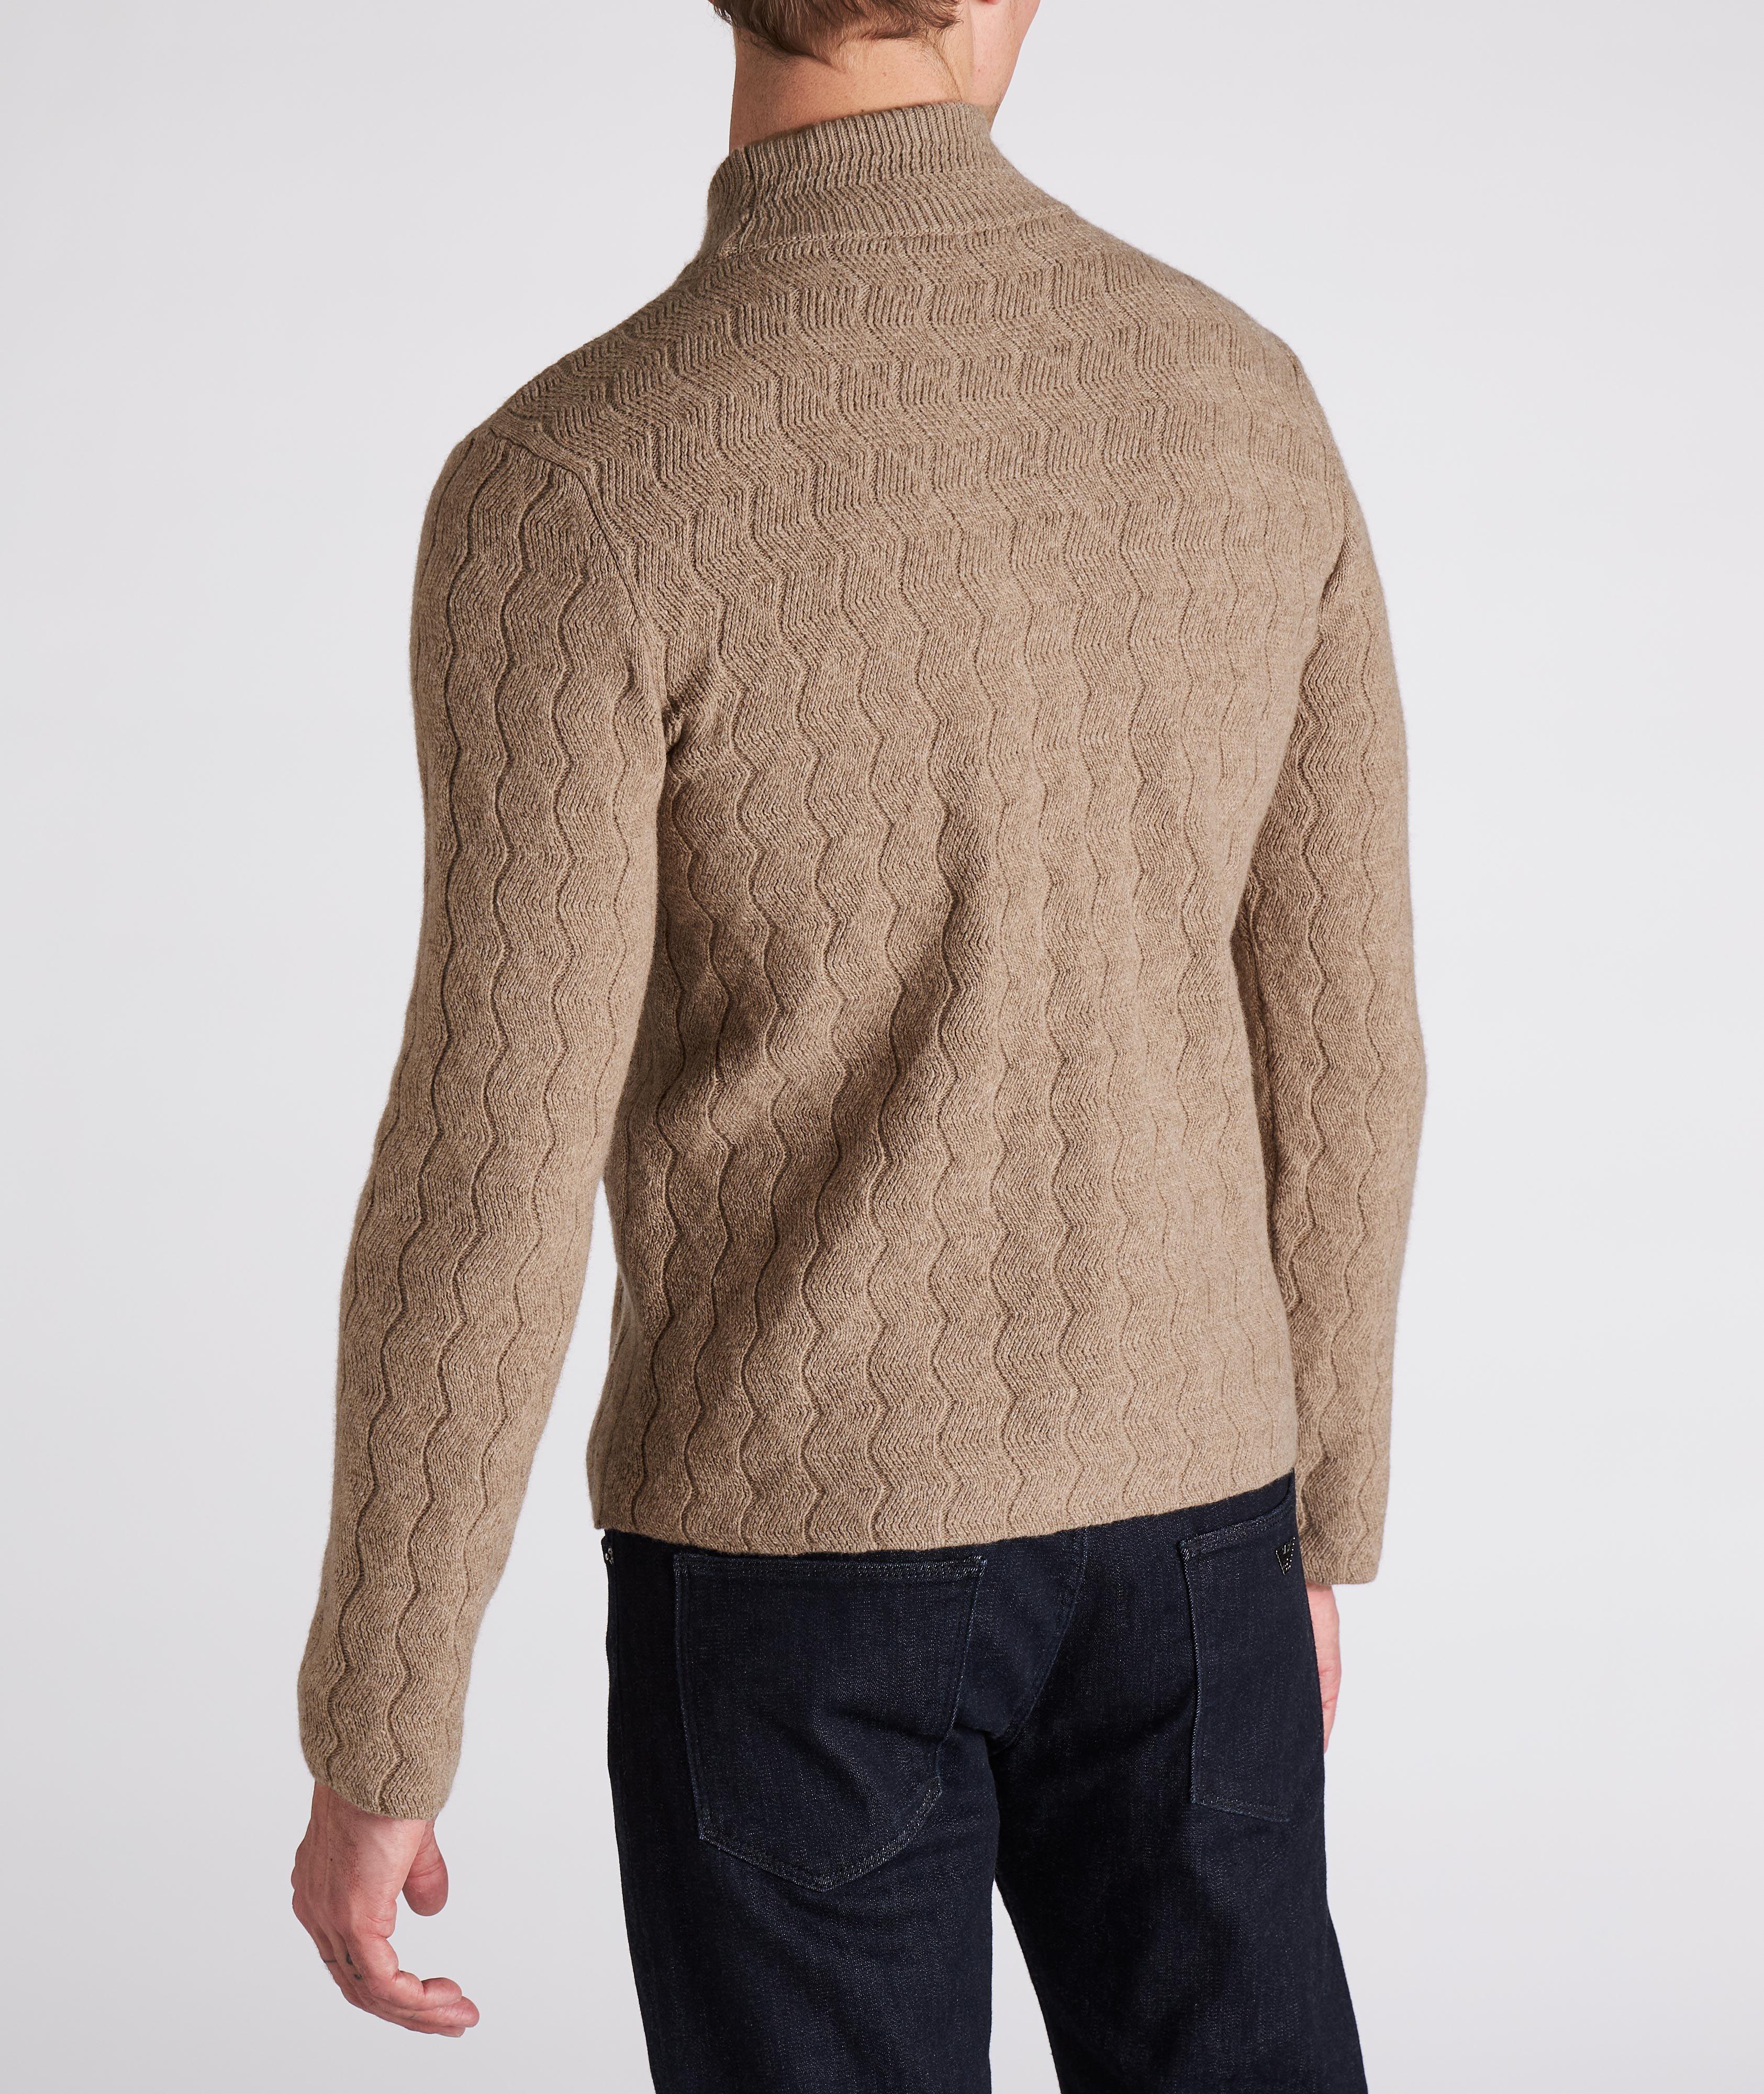 Wool-Cashmere Knit Turtleneck image 2